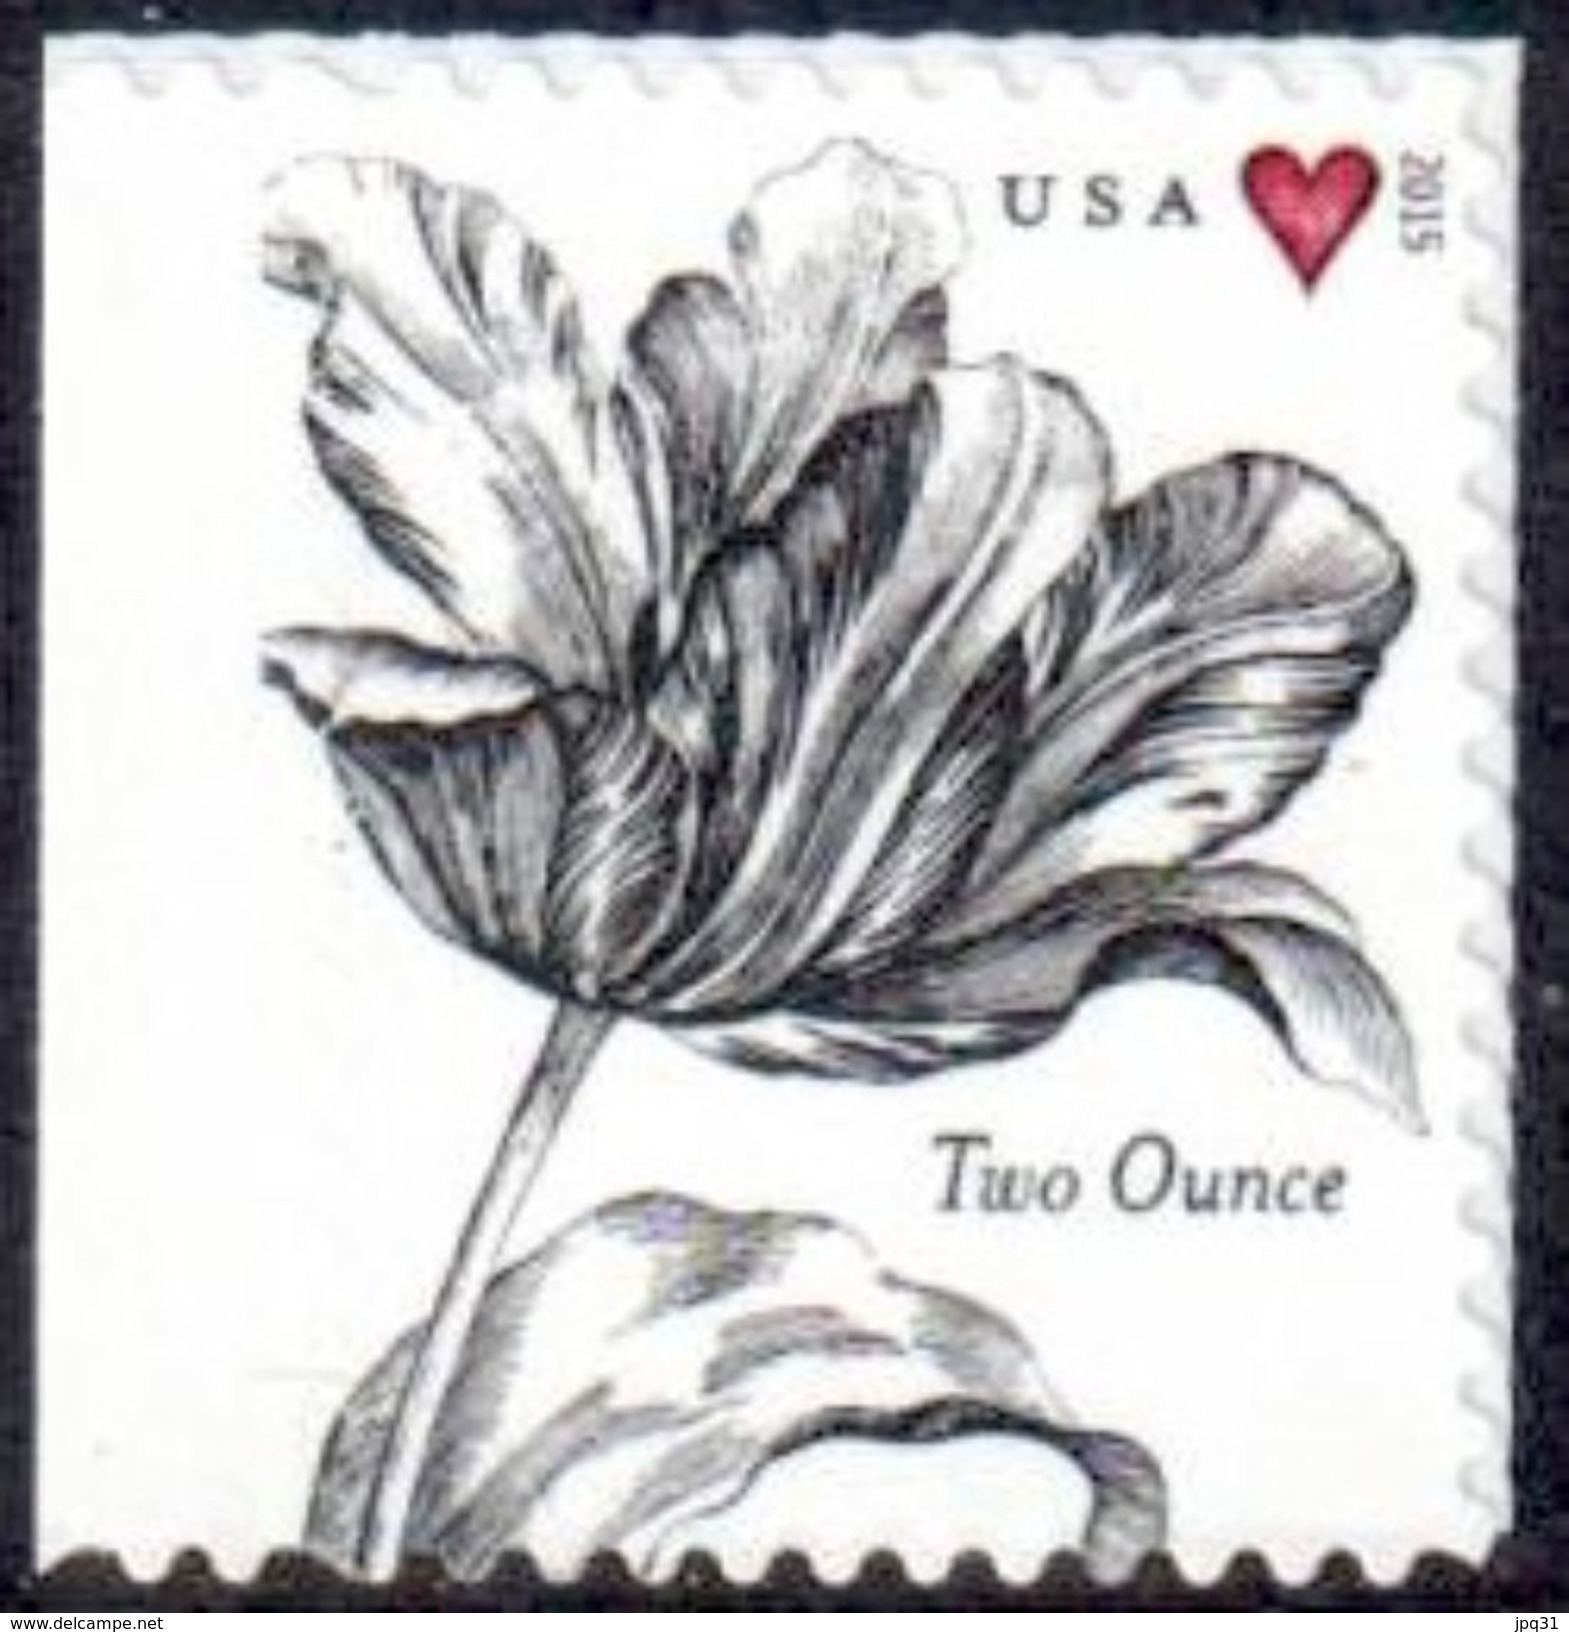 USA Timbre Adhésif Tulipe Ancienne 2 Ounce 2015 ** - Ongebruikt